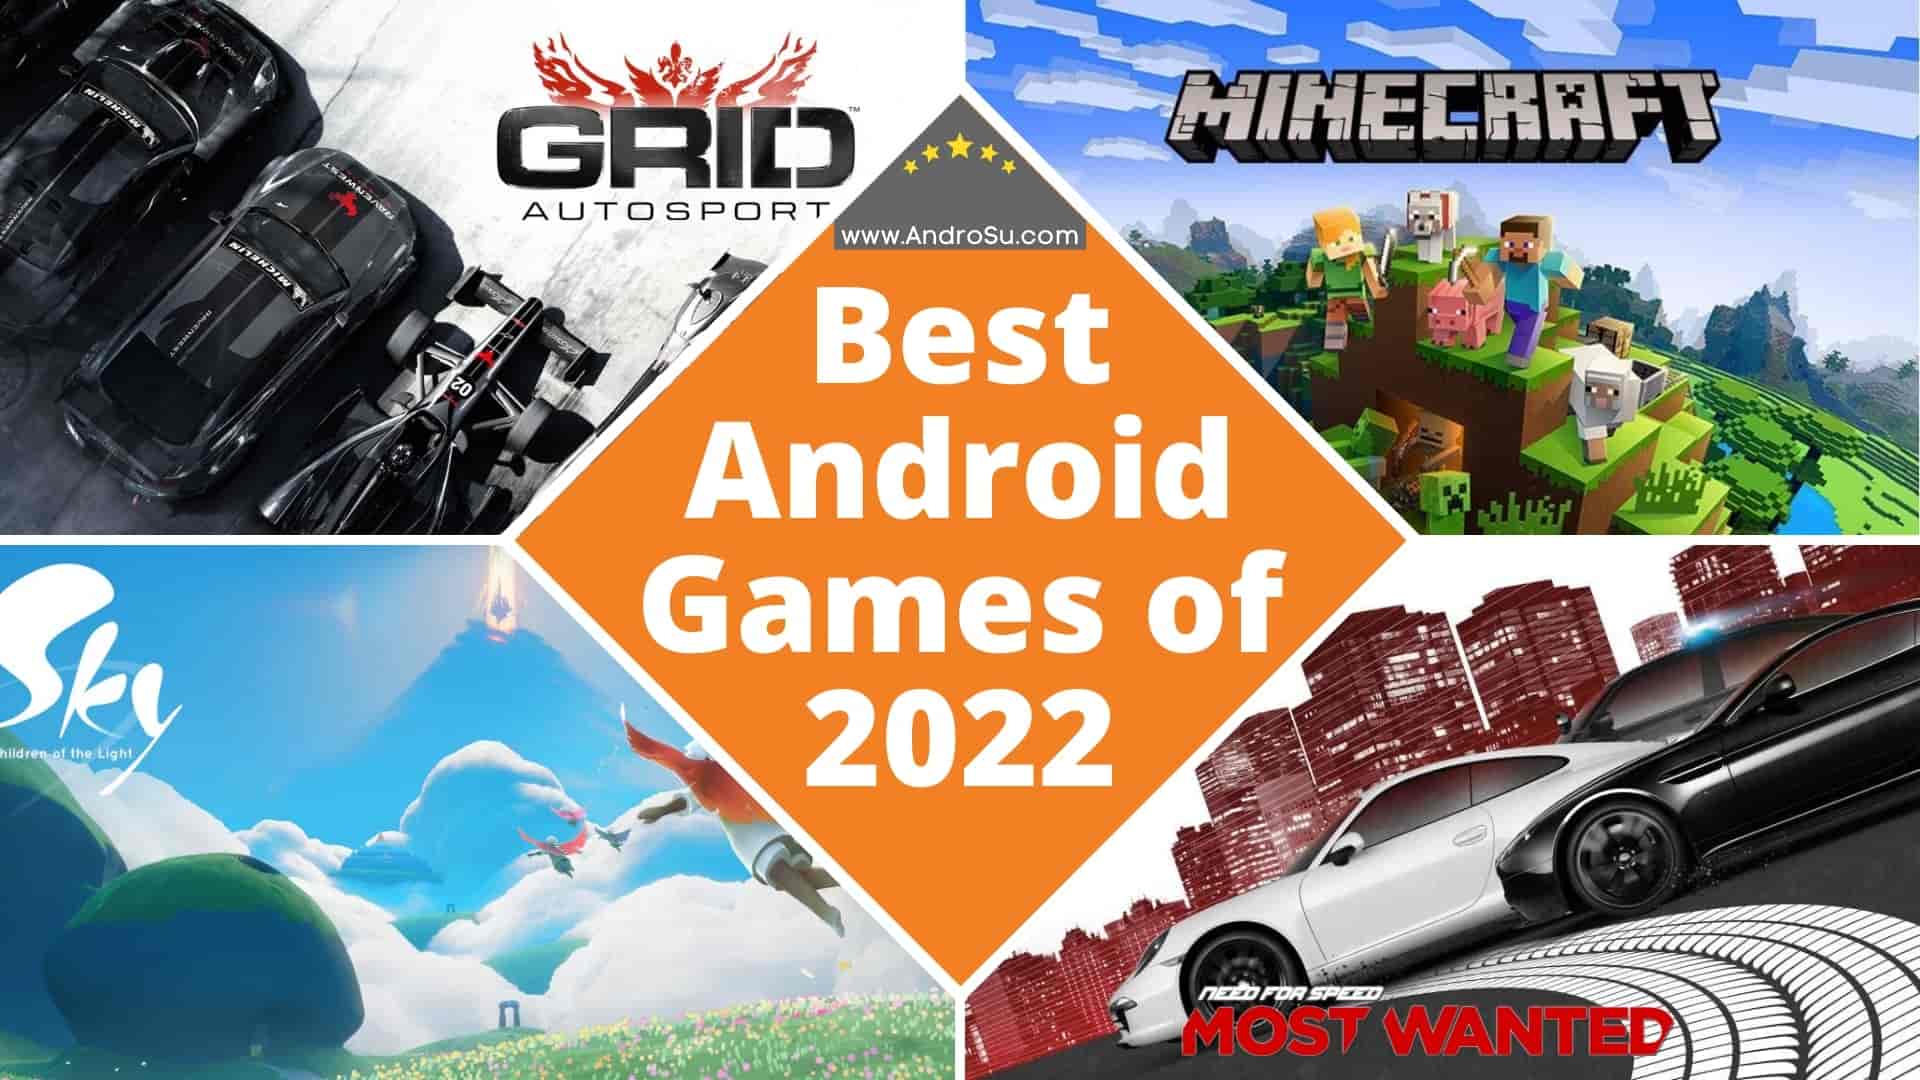 Best Android Games, Best Android Games 2022, Android Games Latest 2022